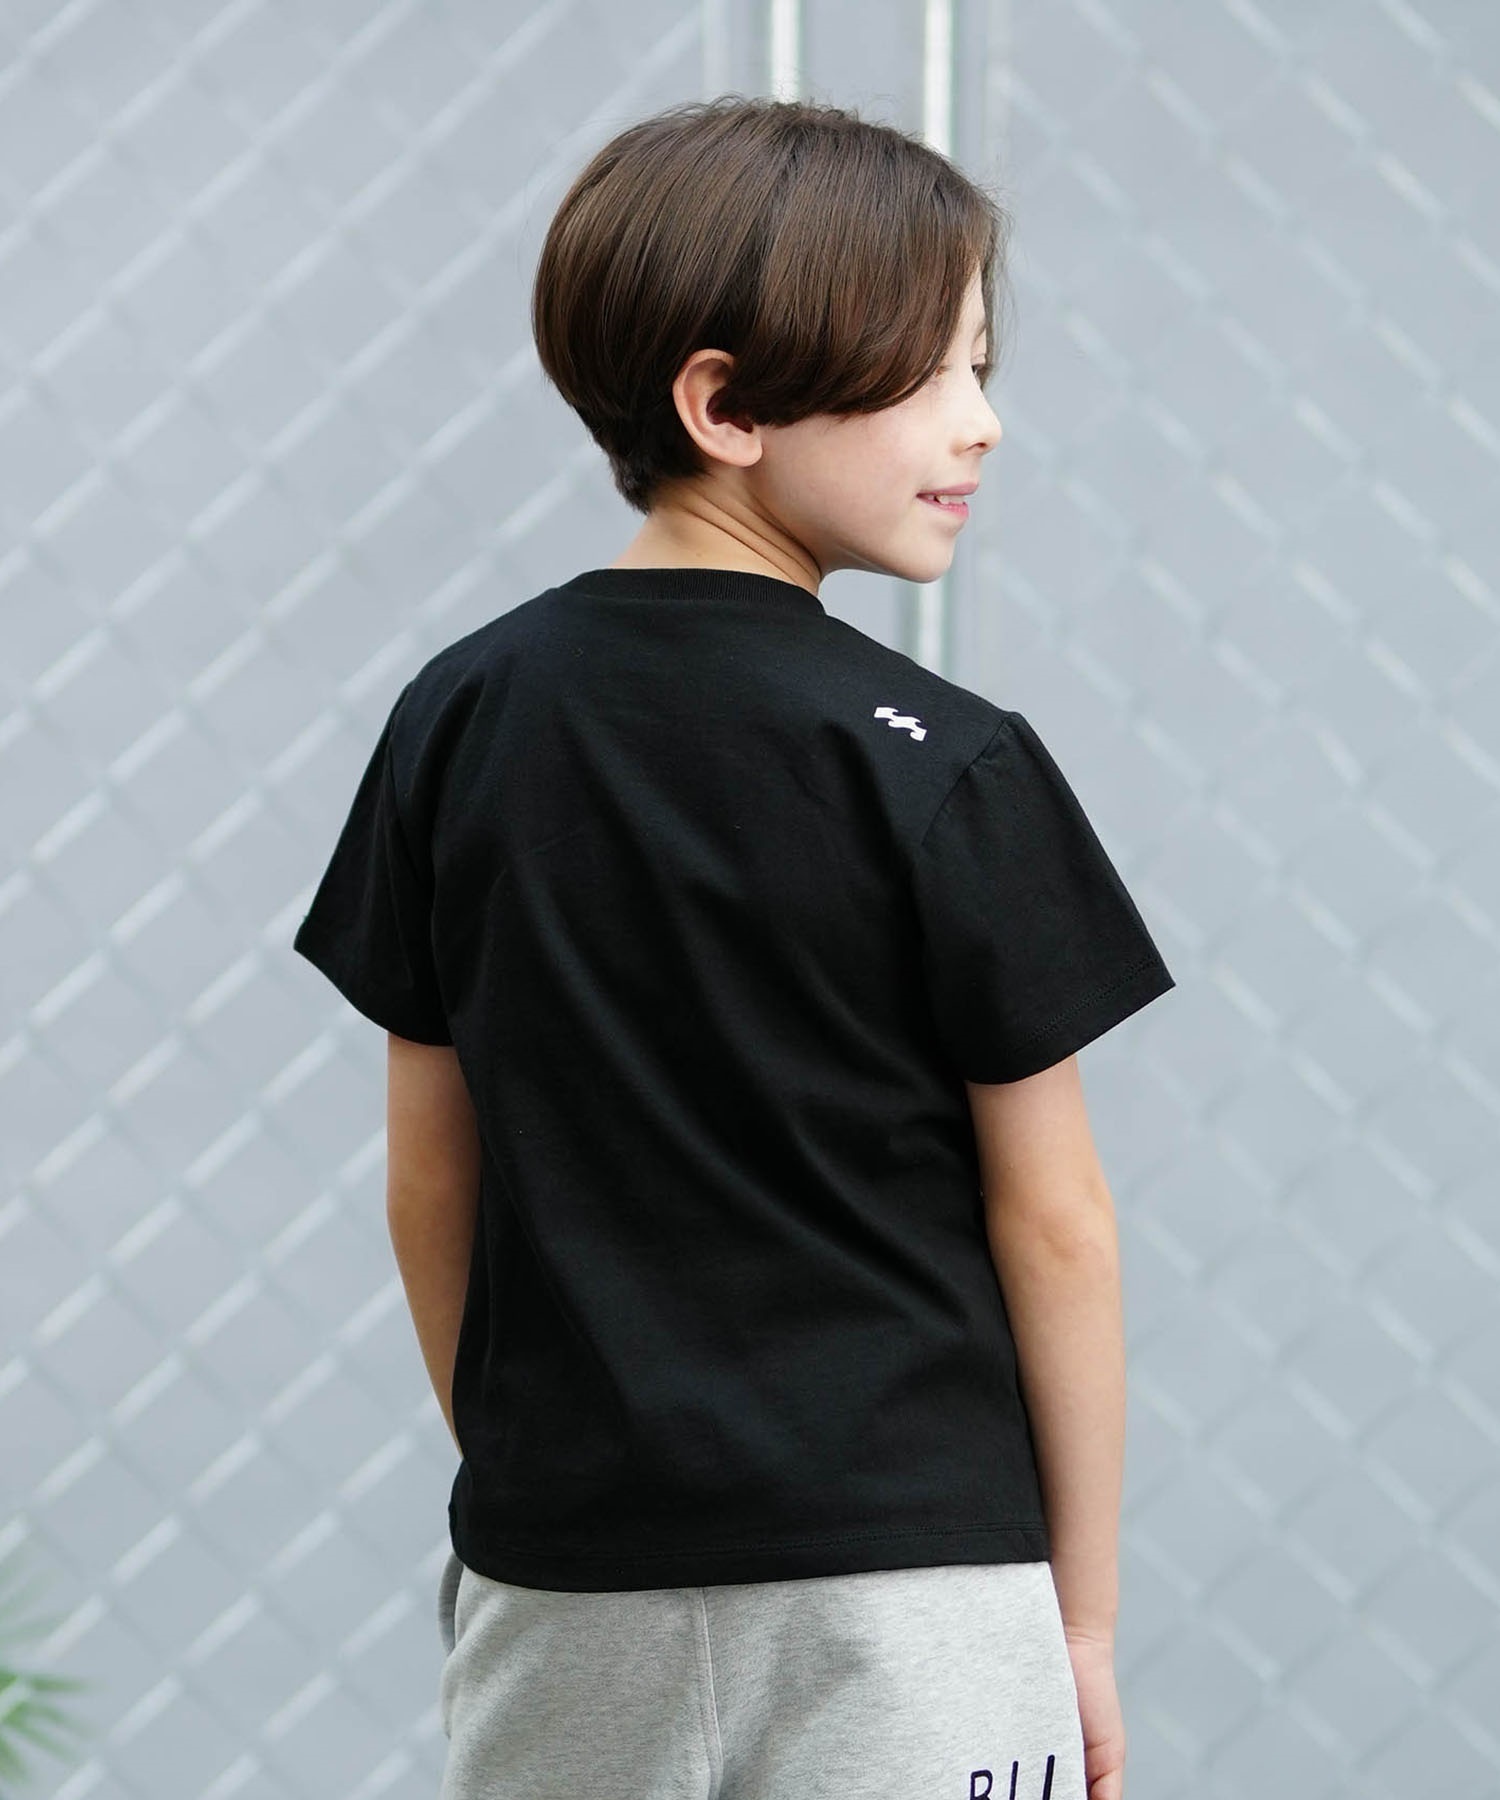 BILLABONG ビラボン UNITY LOGO キッズ 半袖 Tシャツ BE015-204(BLK-90cm)